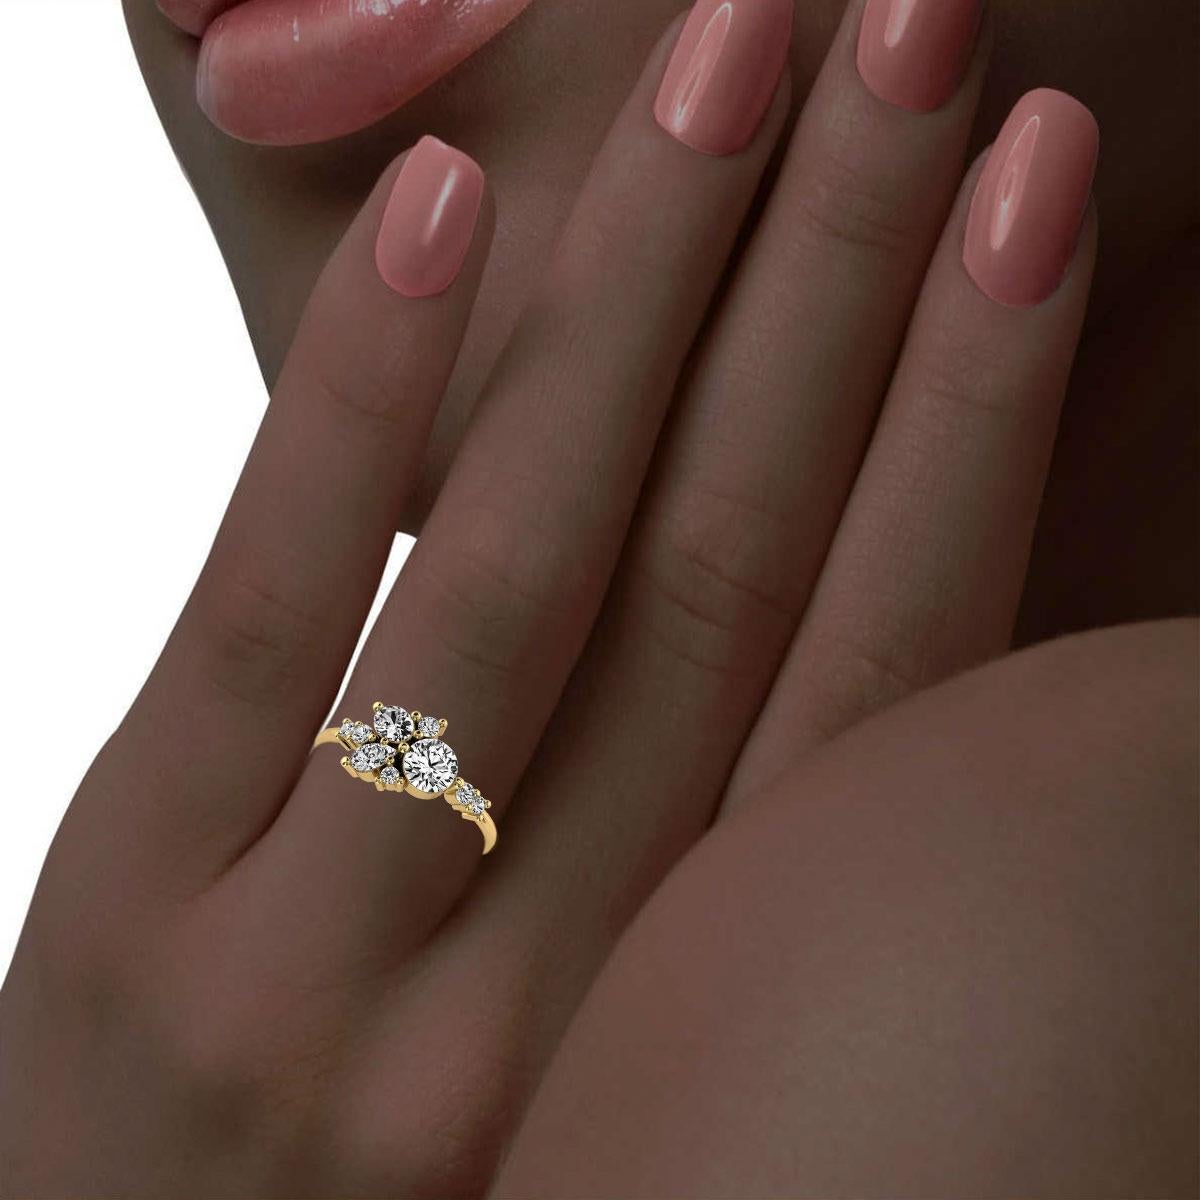 scattered diamond engagement ring